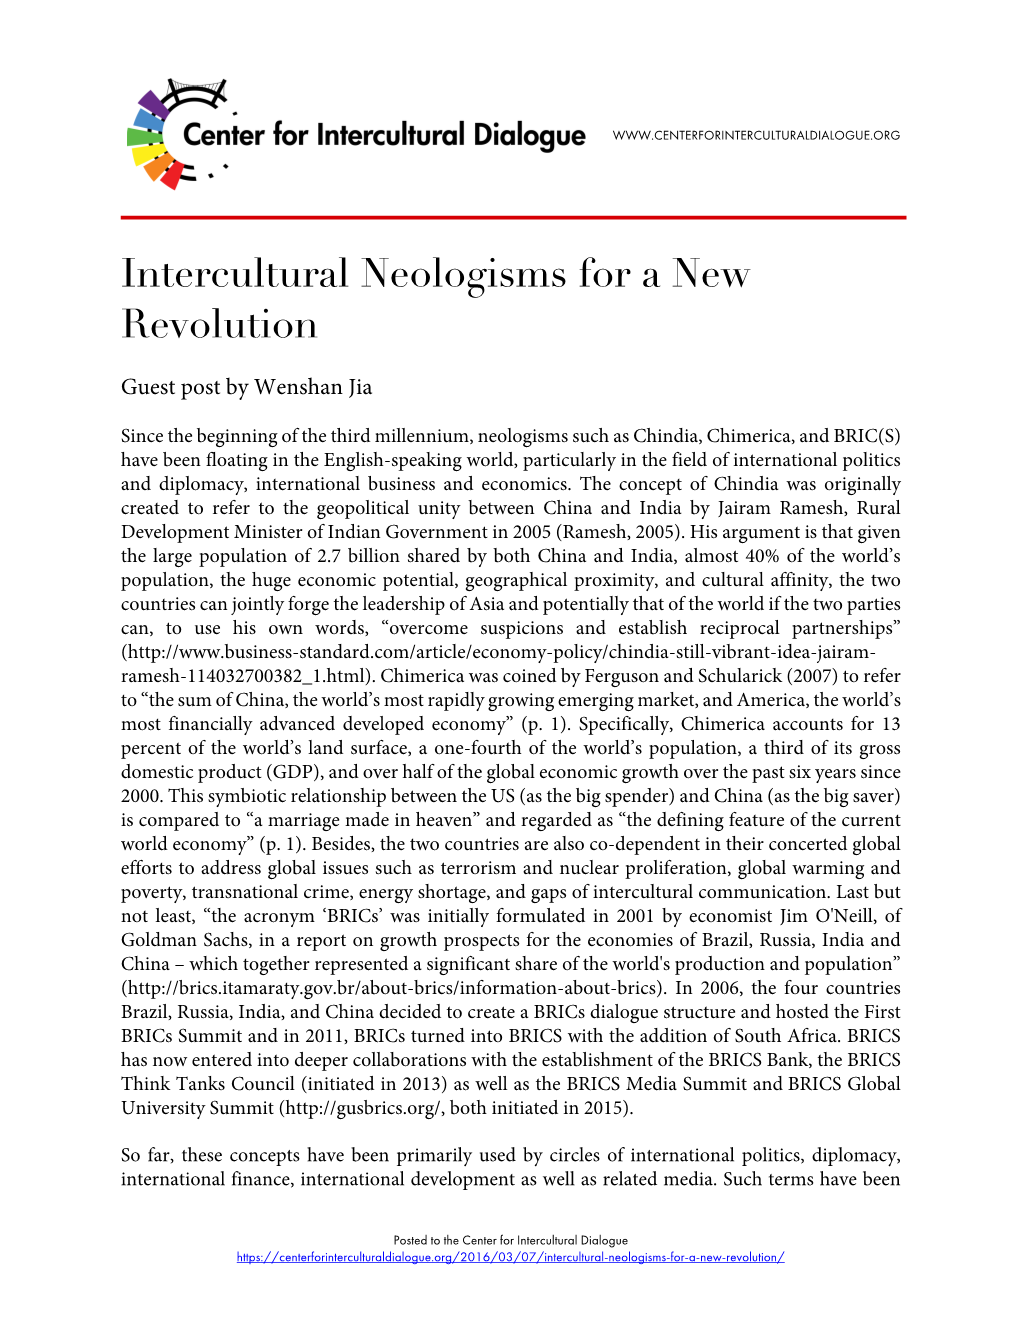 Intercultural Neologisms for a New Revolution